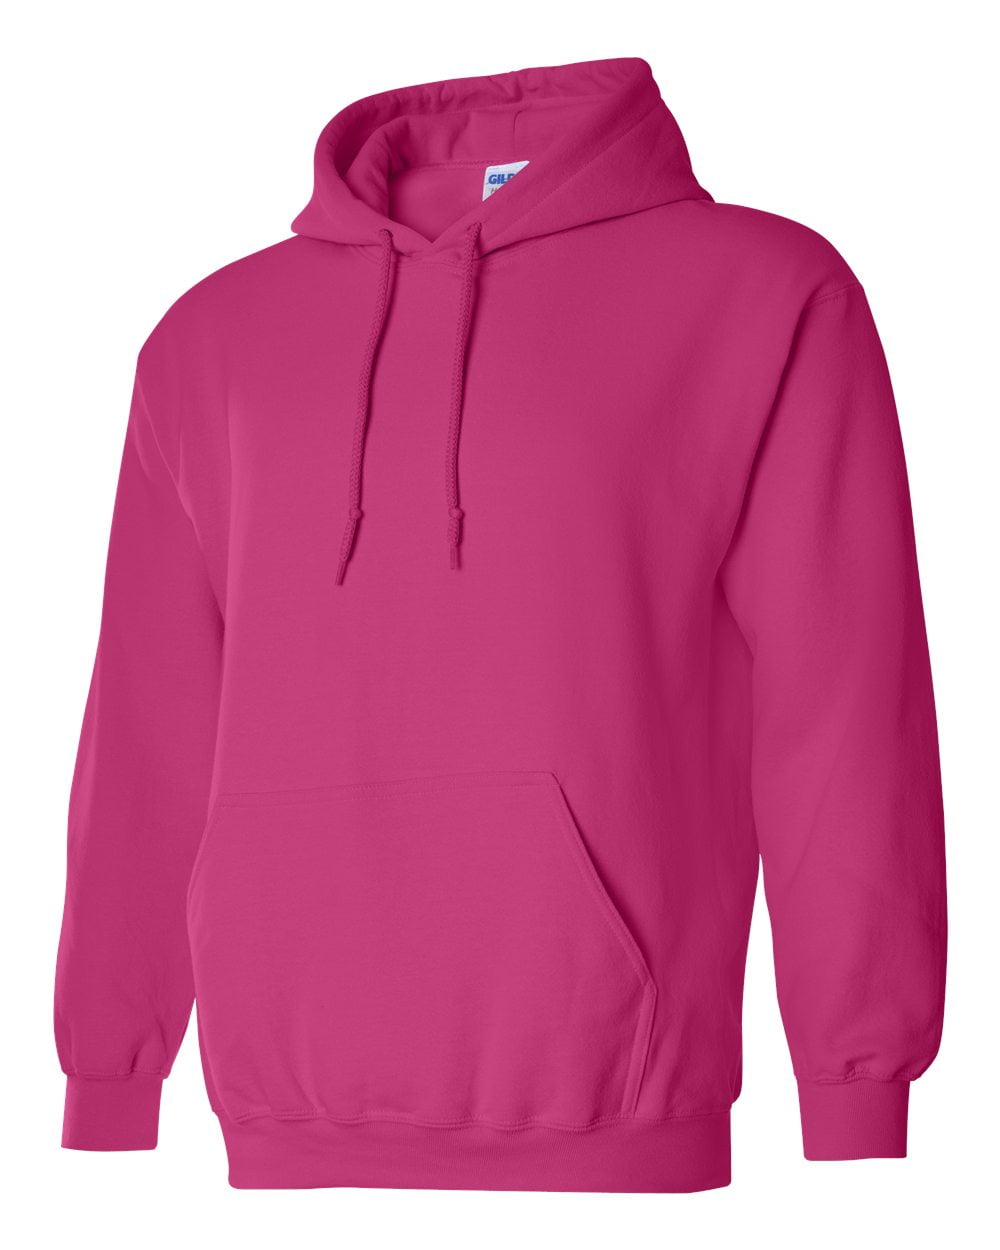 Women Sweatshirts and Hoodies - Pretty in Pink Dangerous in Camo 